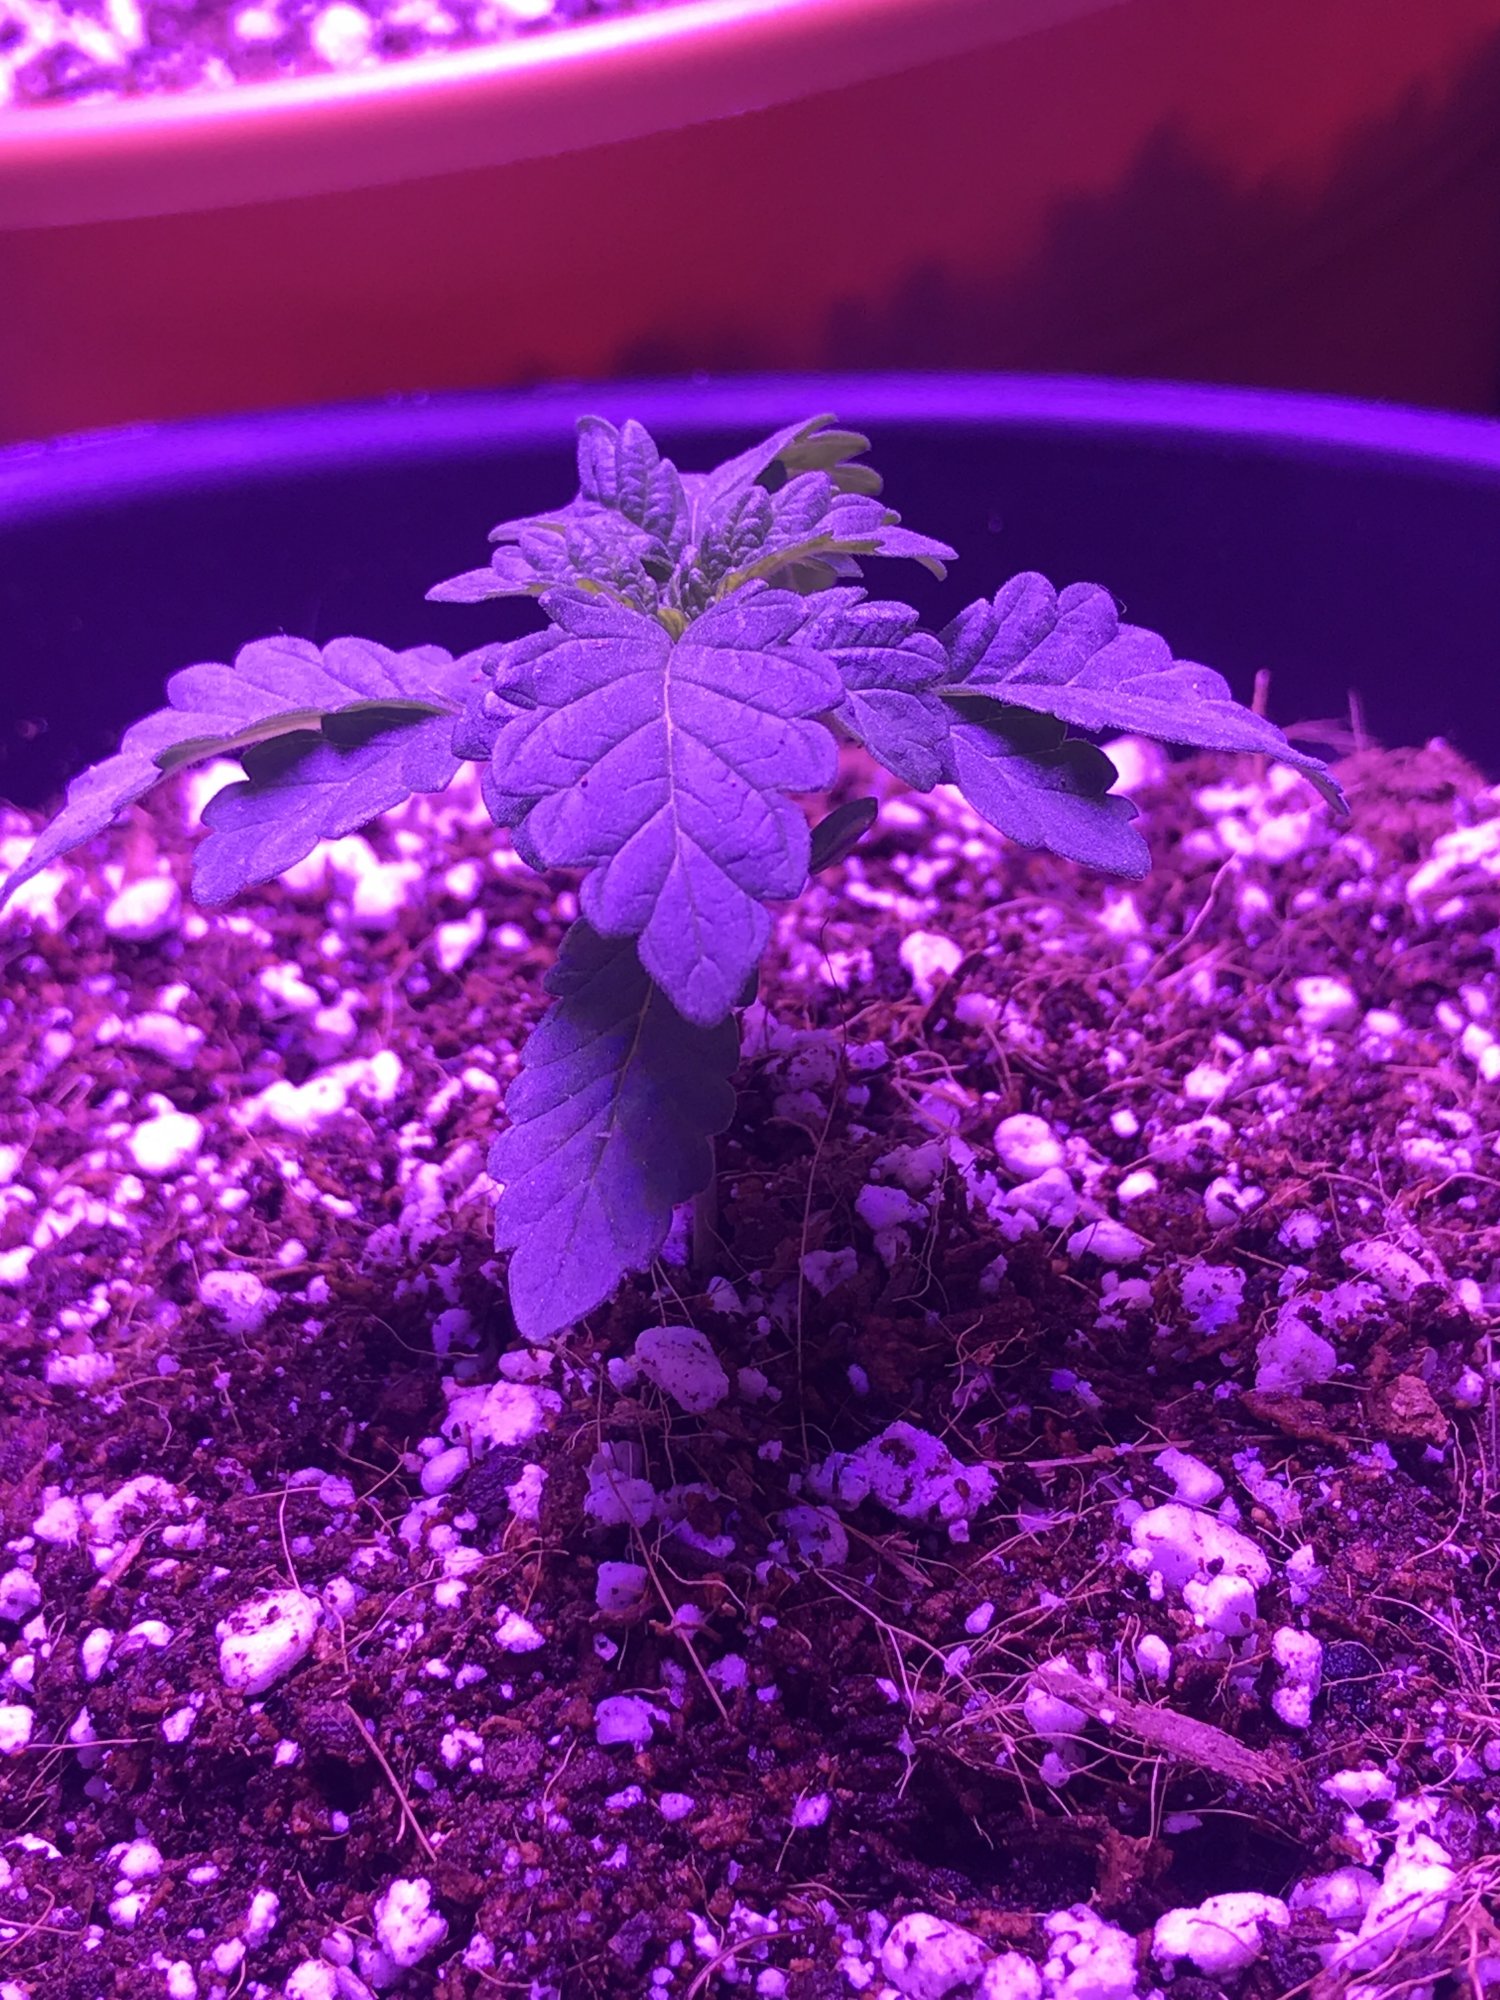 Are my plants okay guys 3